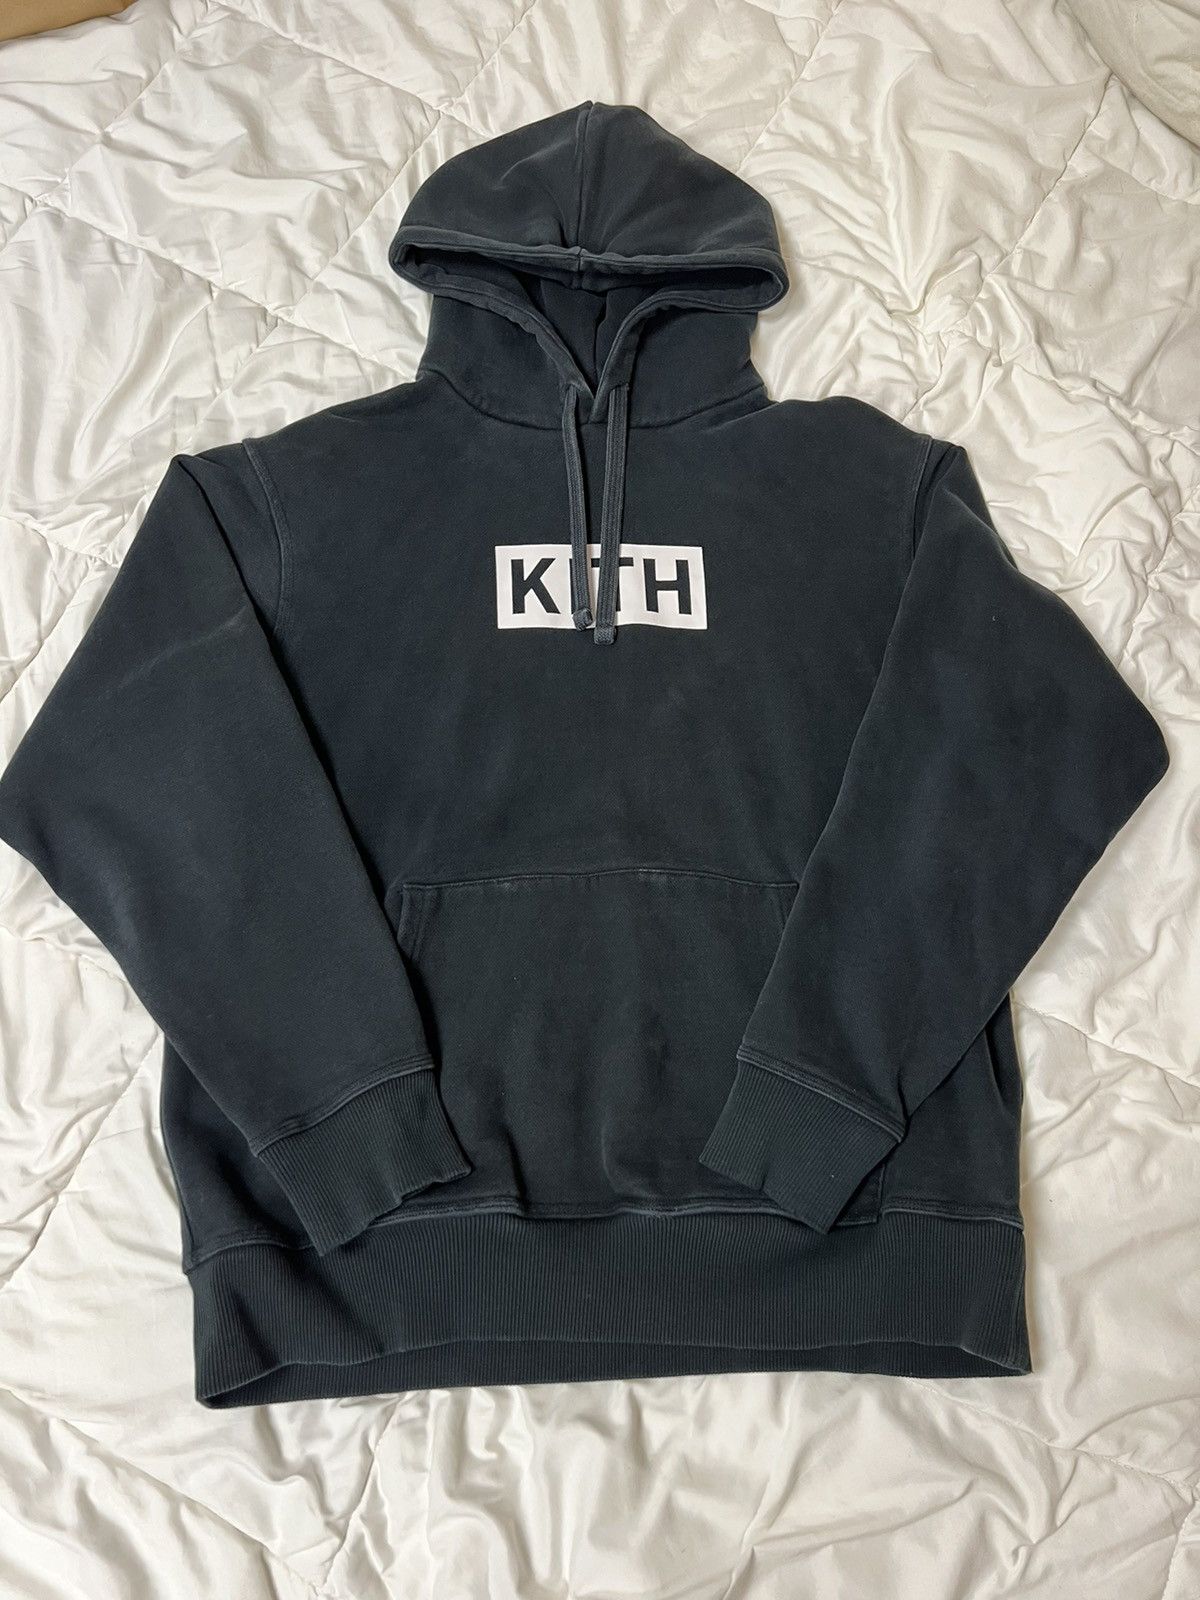 Kith Kith box logo hoodie | Grailed